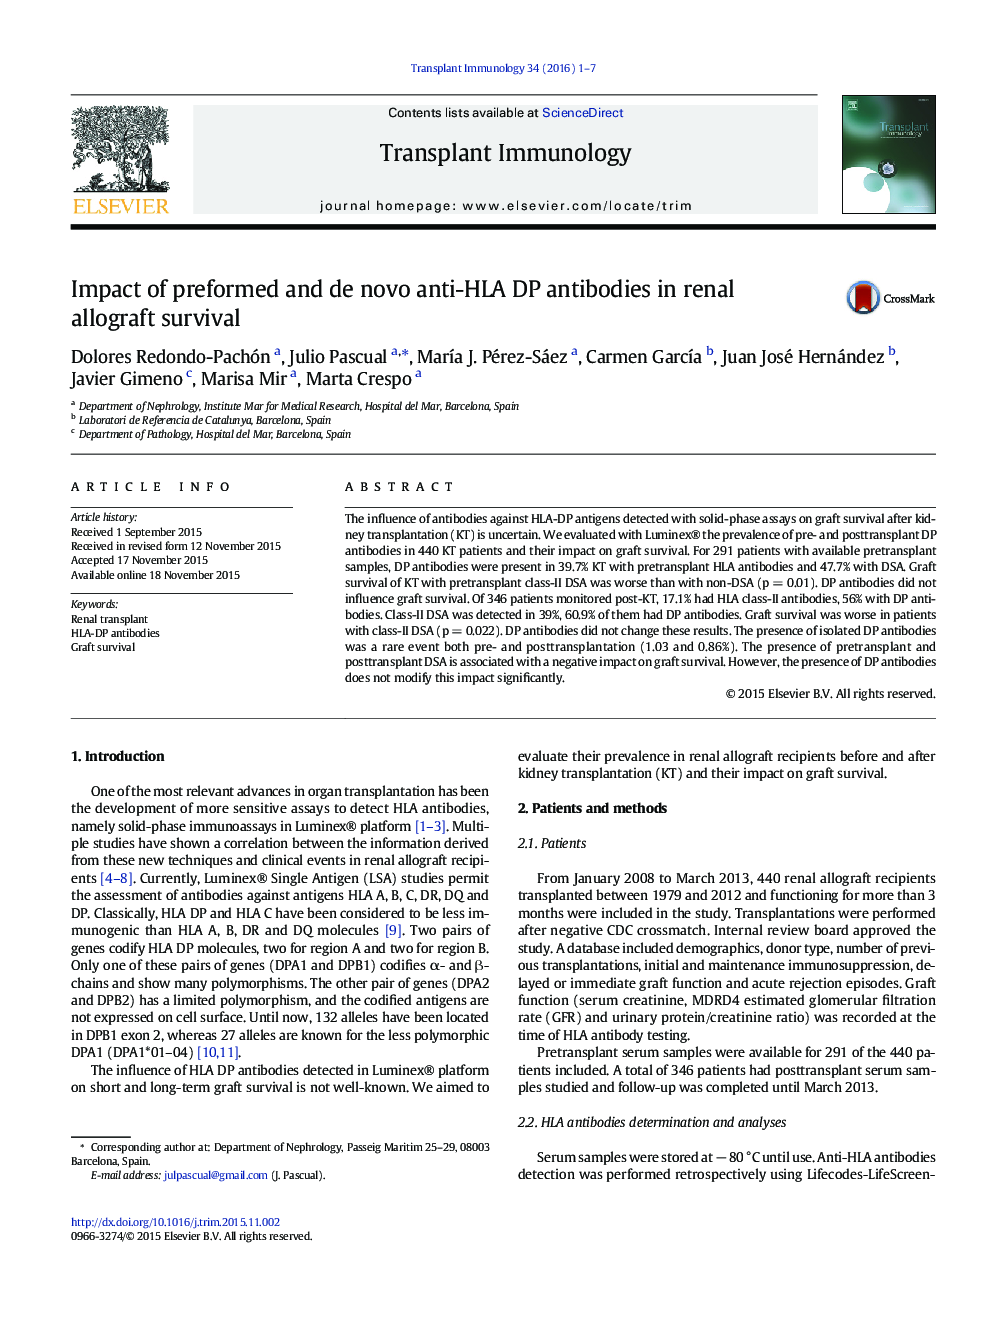 Impact of preformed and de novo anti-HLA DP antibodies in renal allograft survival